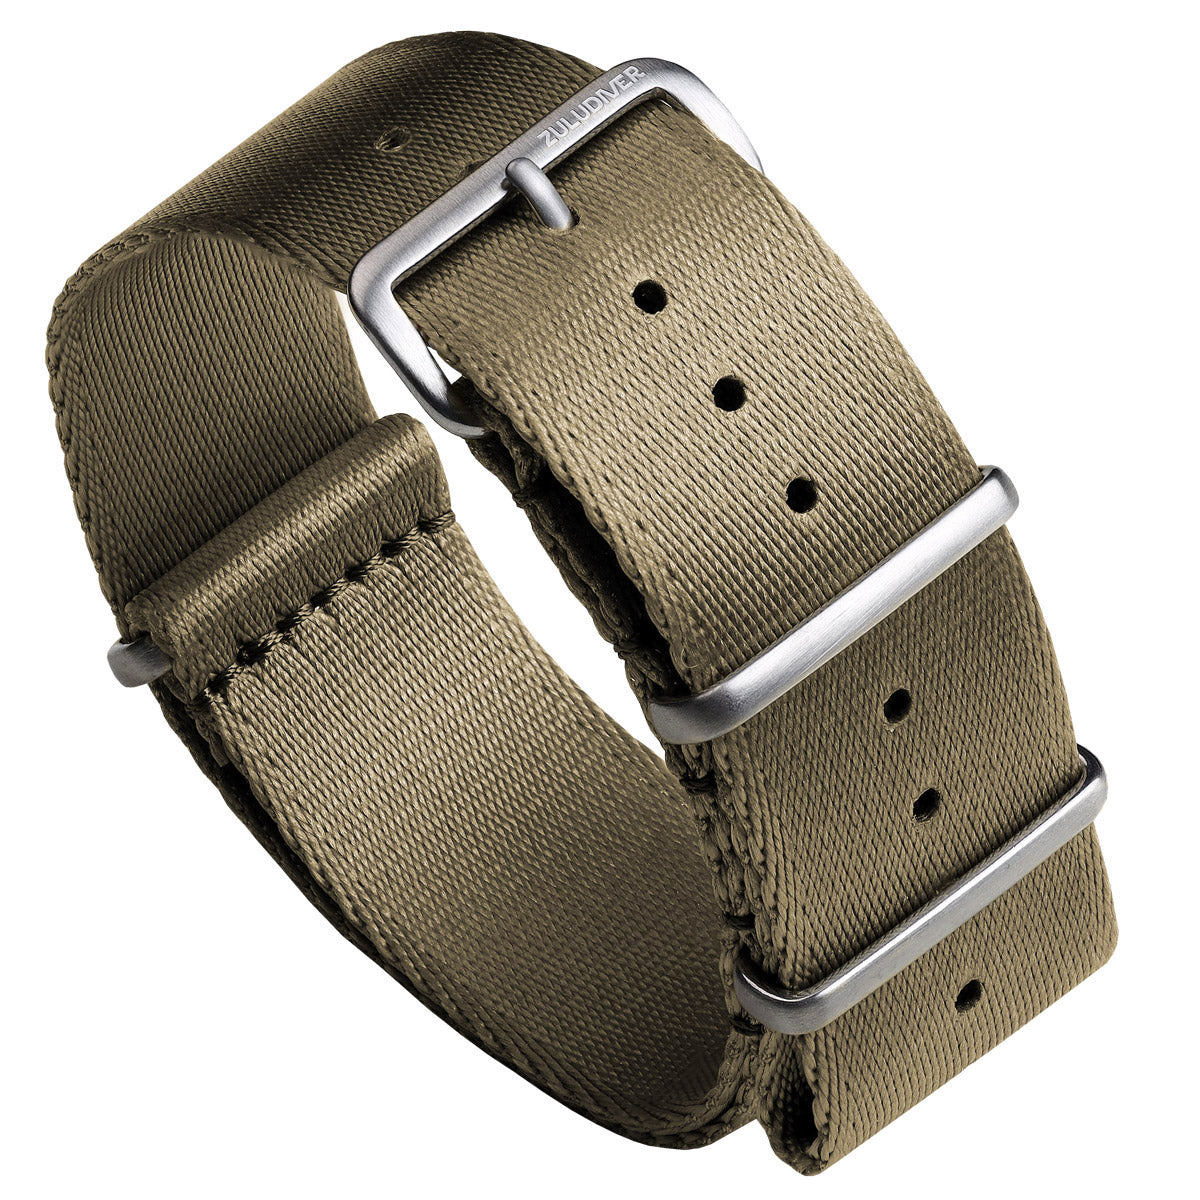 Omega style NATO Watch Straps, nylon seat belt, desert sand colours, white background image